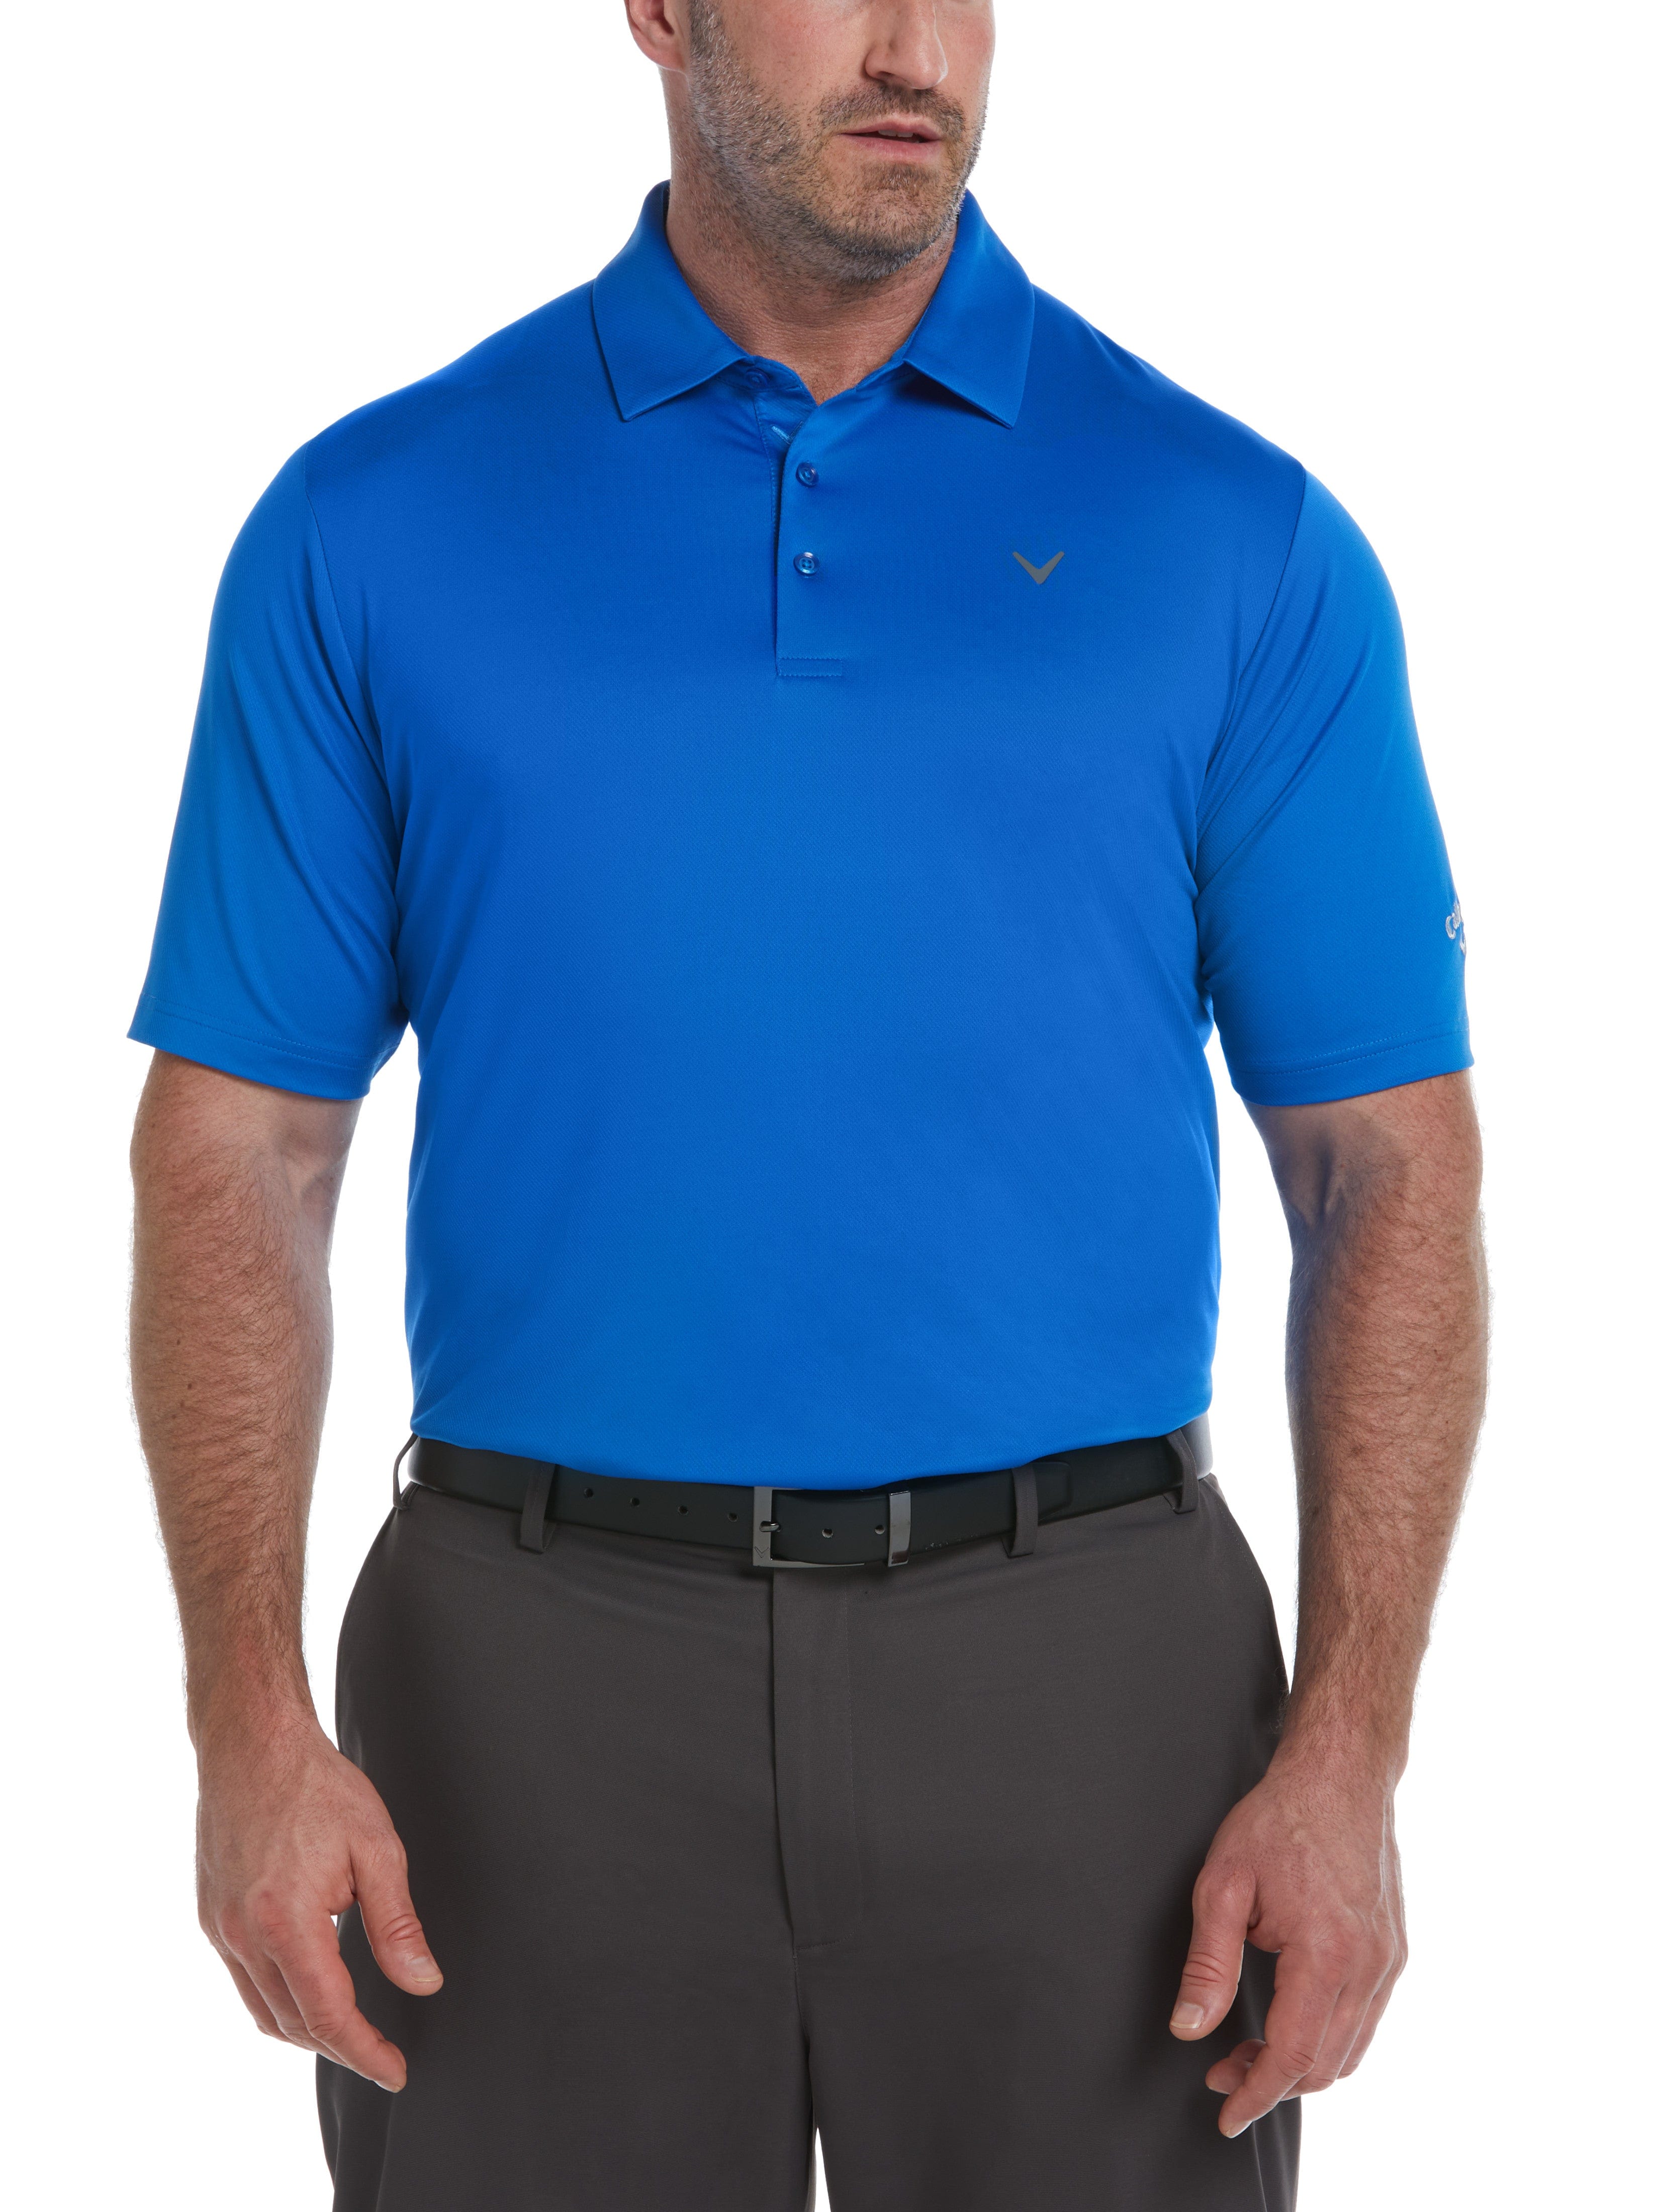 Callaway Apparel Mens Big & Tall Solid Swing Tech Golf Polo Shirt, Size 3X, Magnetic Blue, Polyester/Elastane | Golf Apparel Shop